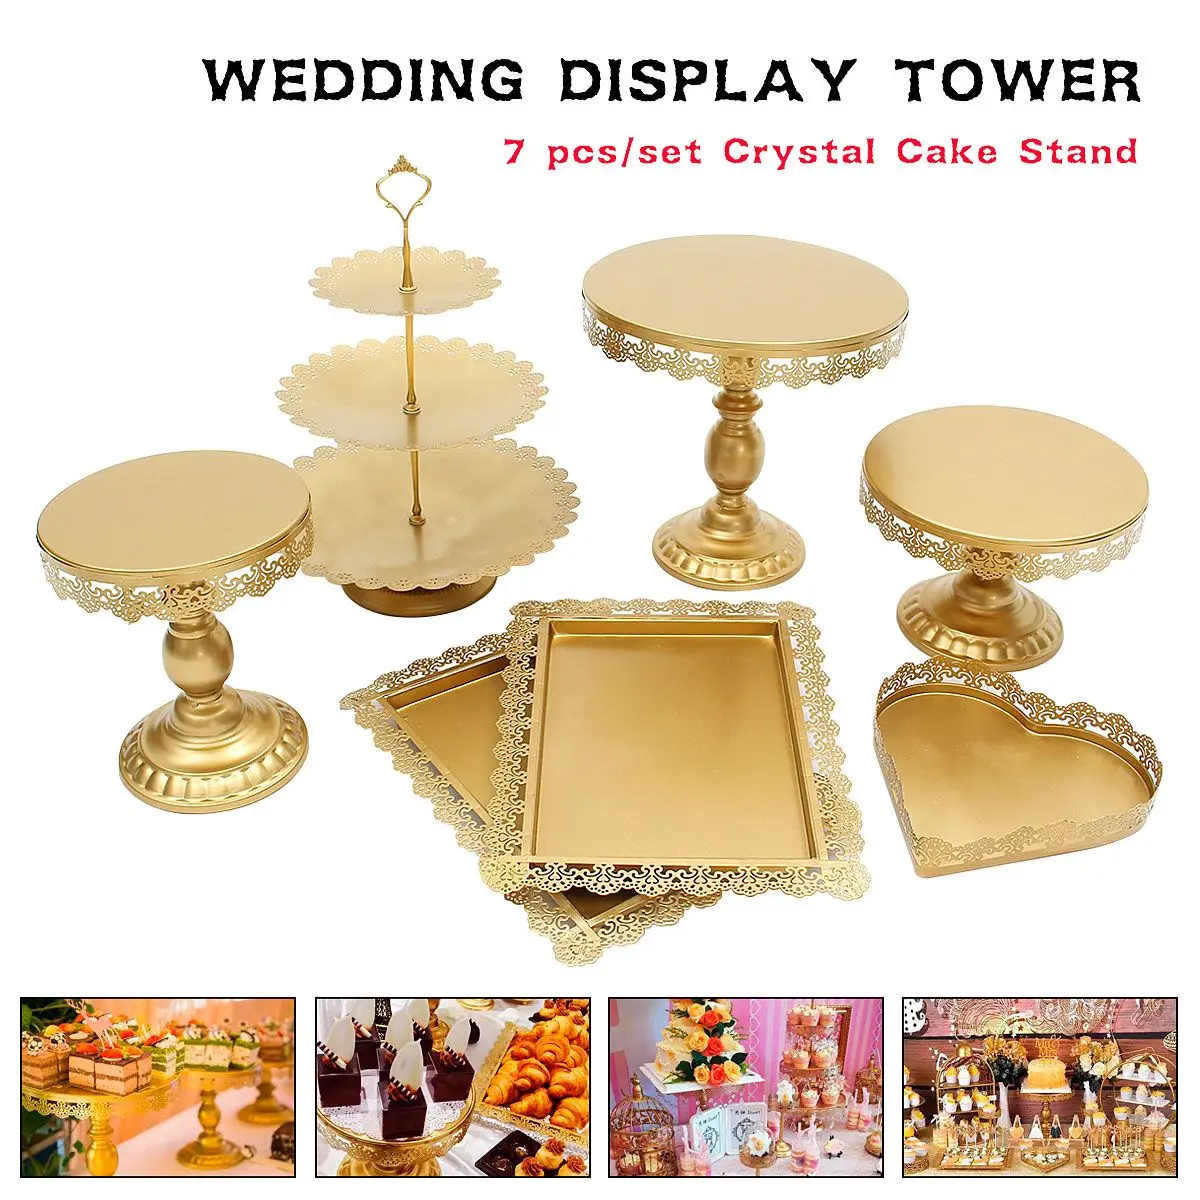 7 Piece Gold White Cake Stand Set Round Metal Crystal Cupcake Dessert Display Pedestal Wedding Party Display